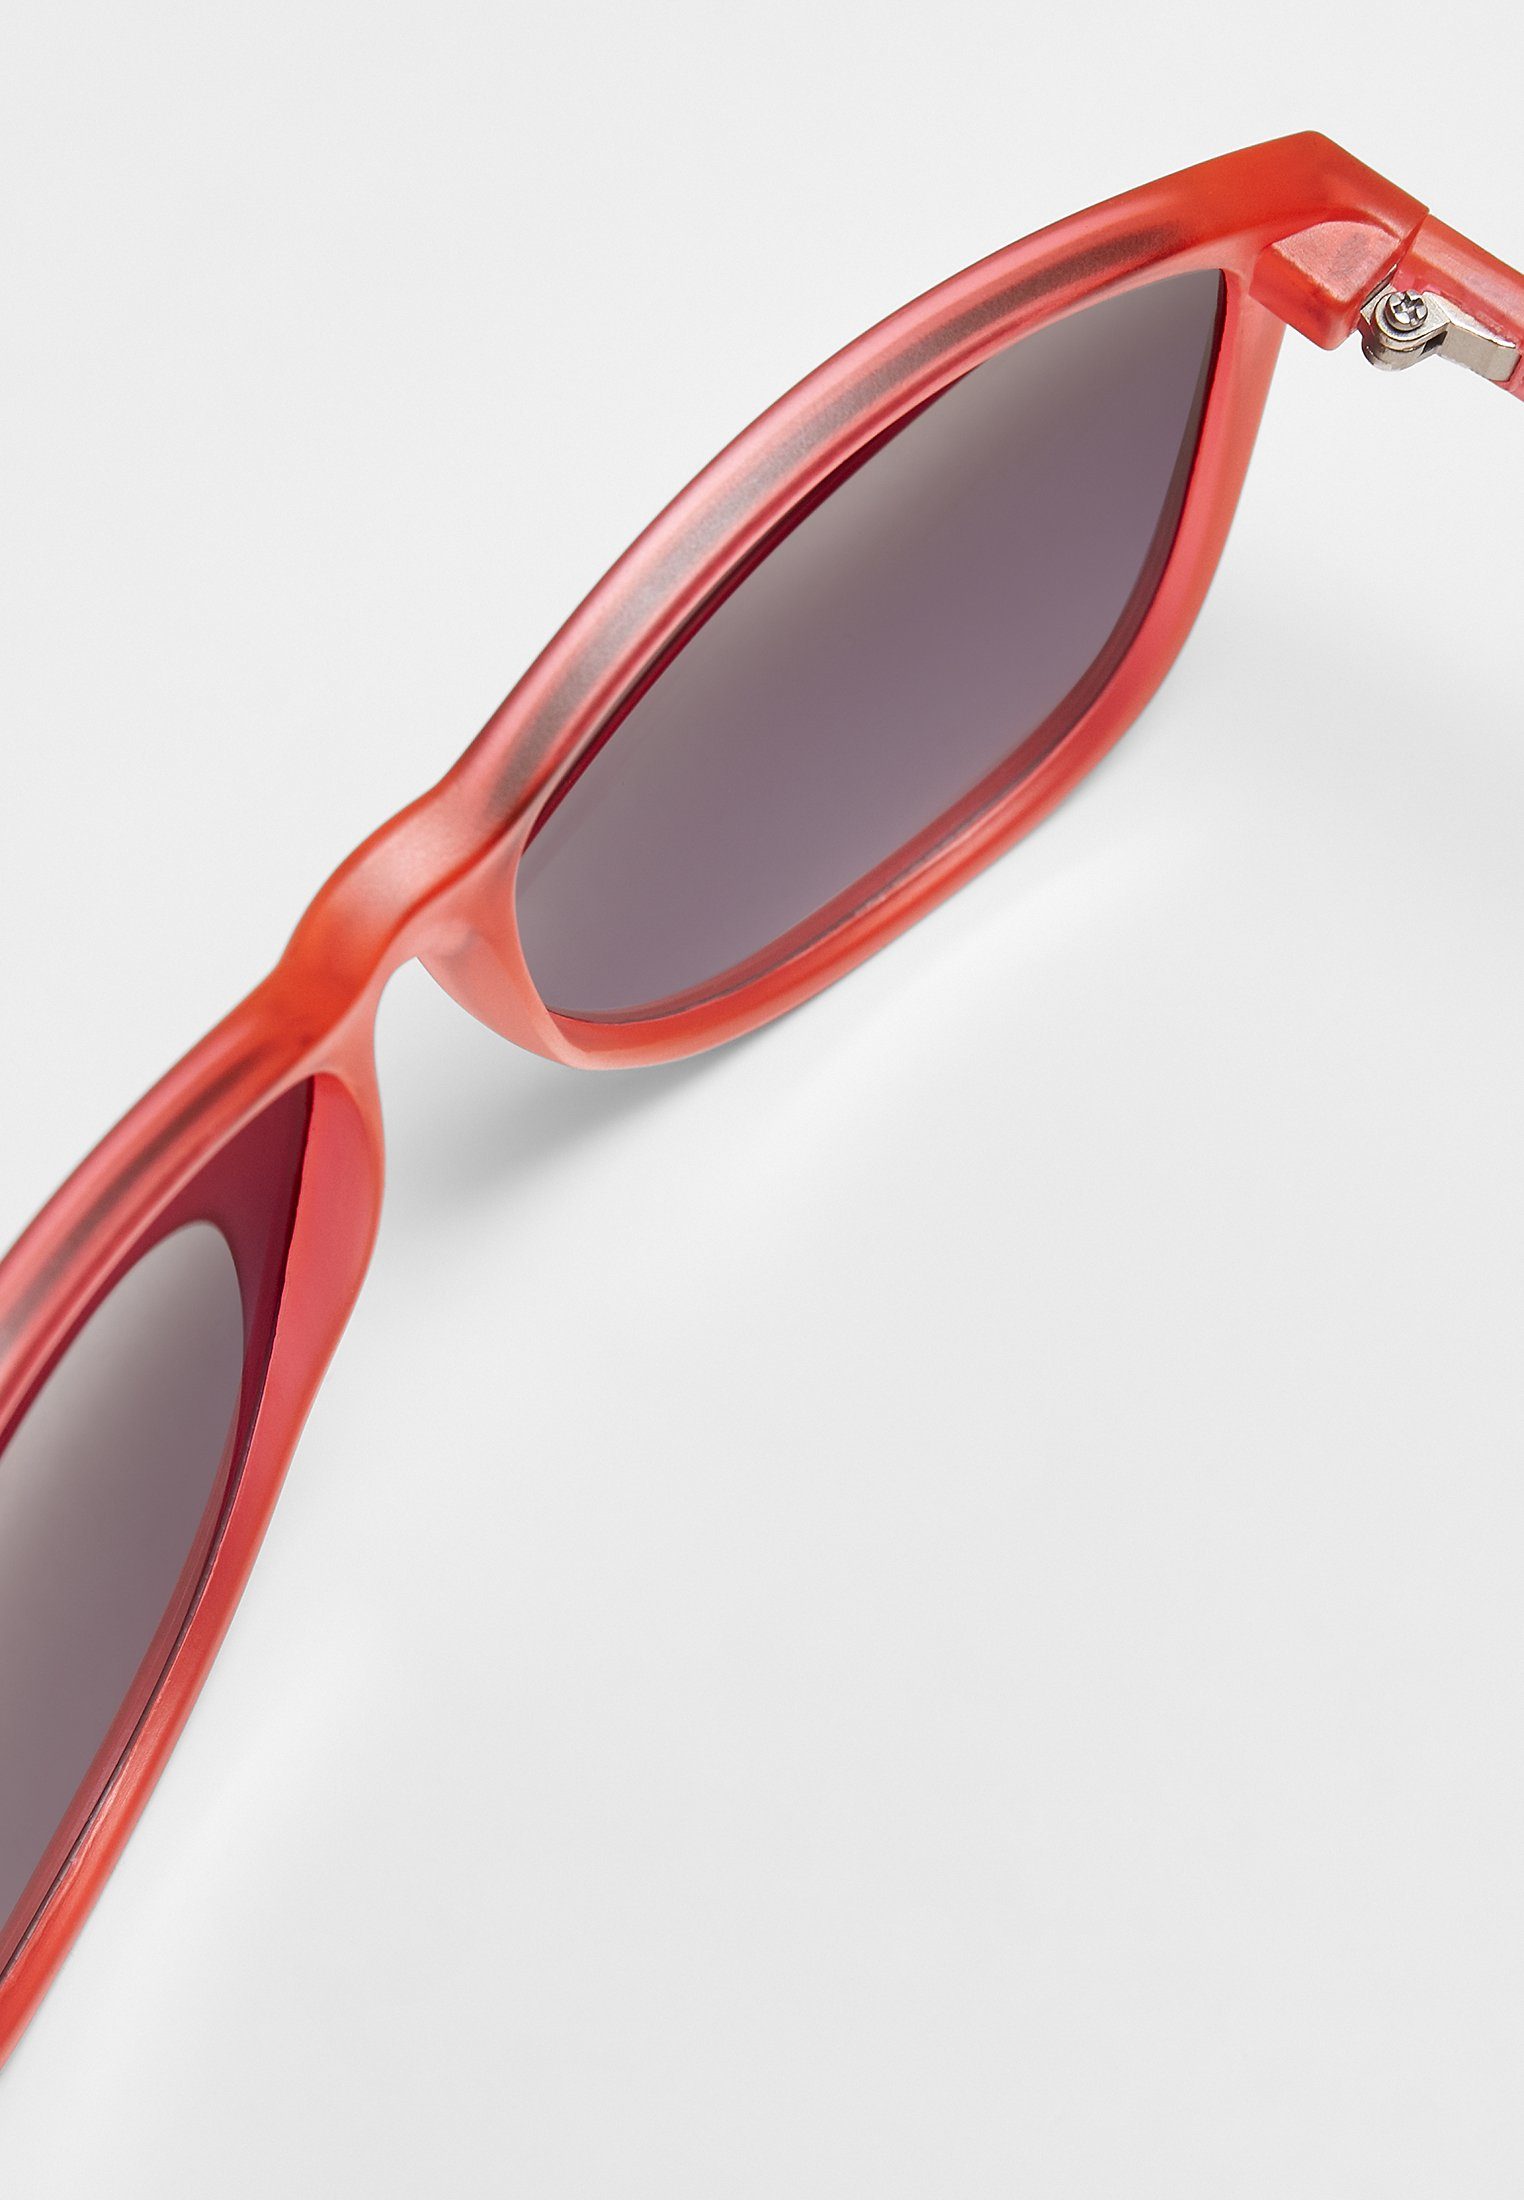 URBAN CLASSICS Sonnenbrille Accessoires Sunglasses red UC Chirwa